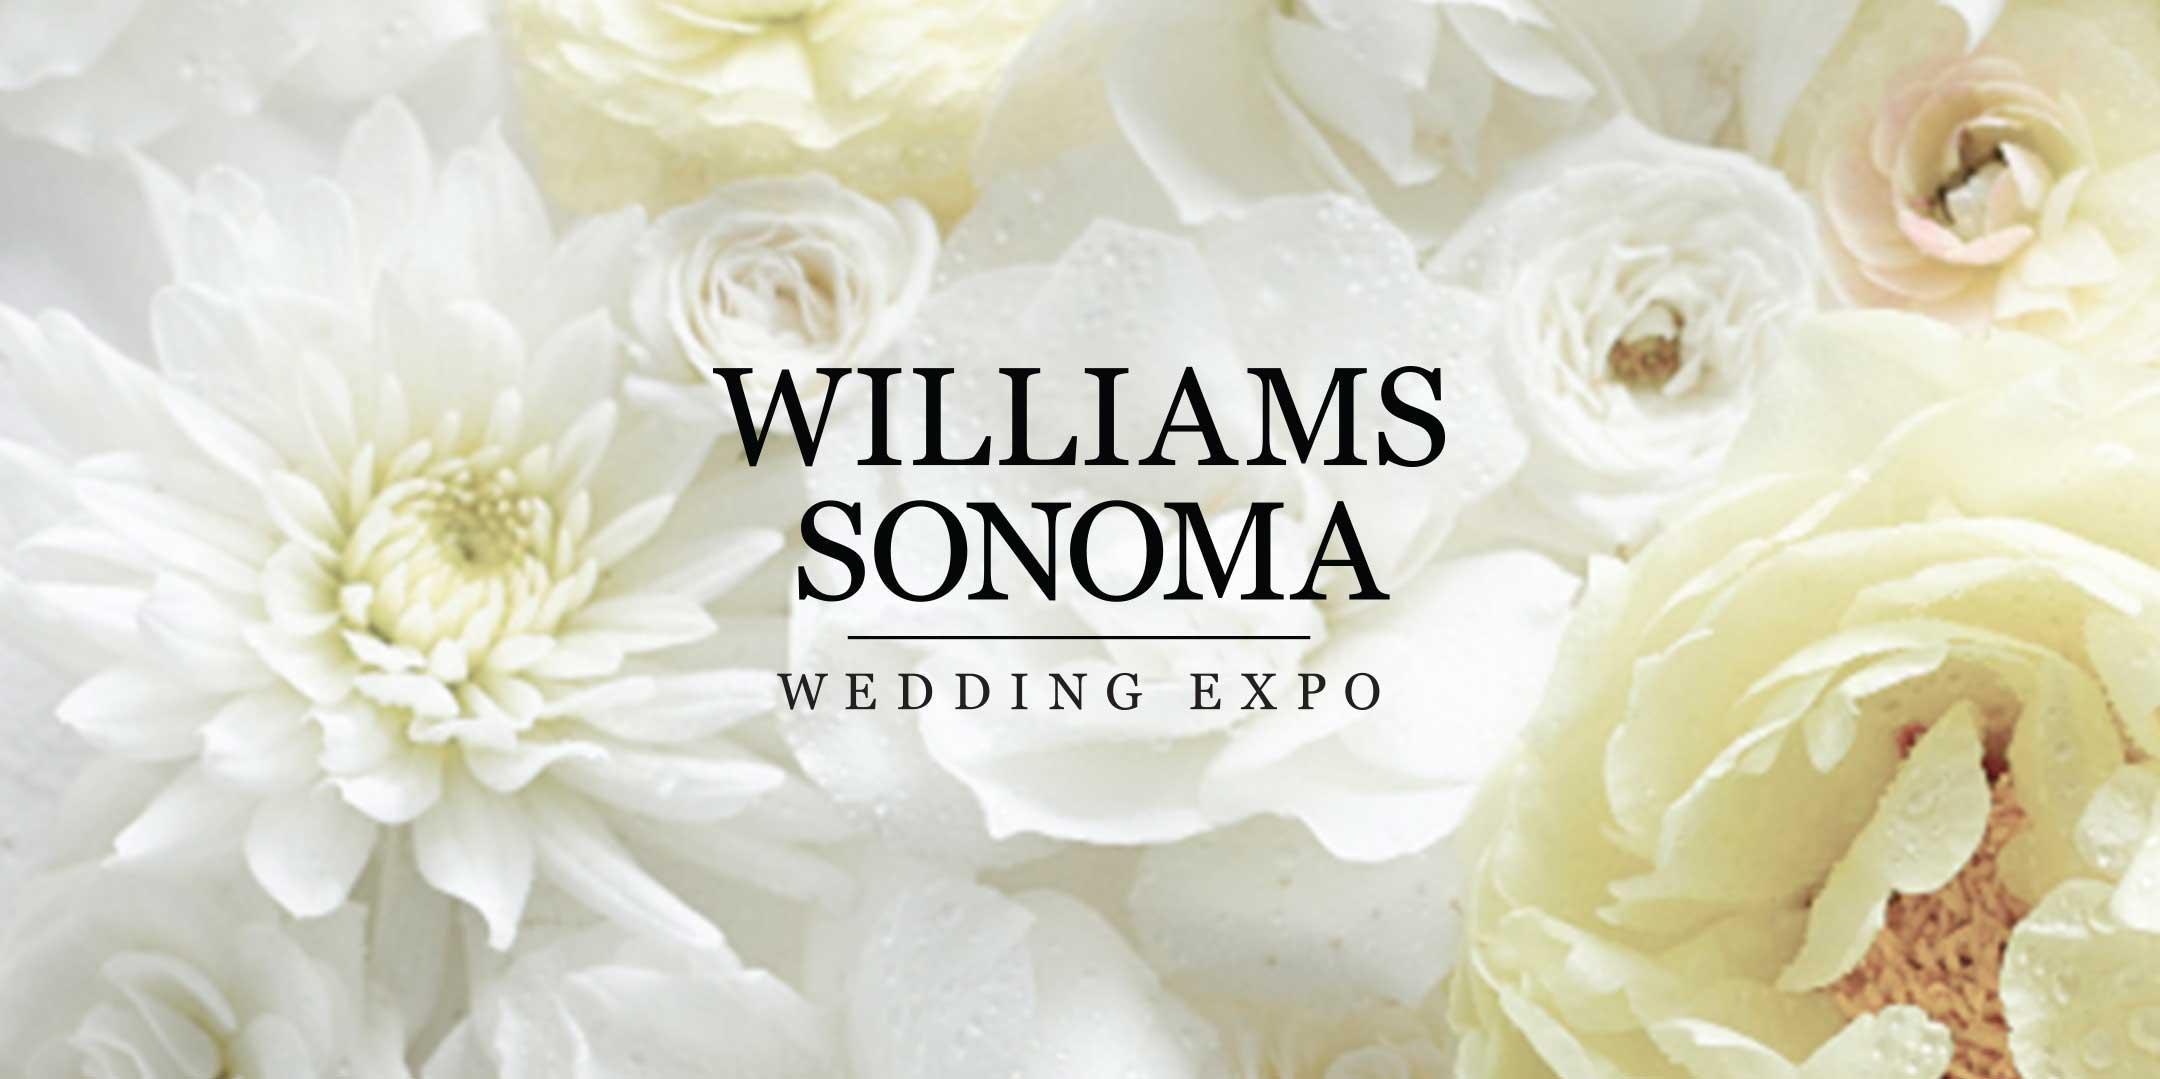 Williams Sonoma Wedding Expo in Edina...Happily Ever Starts Here!